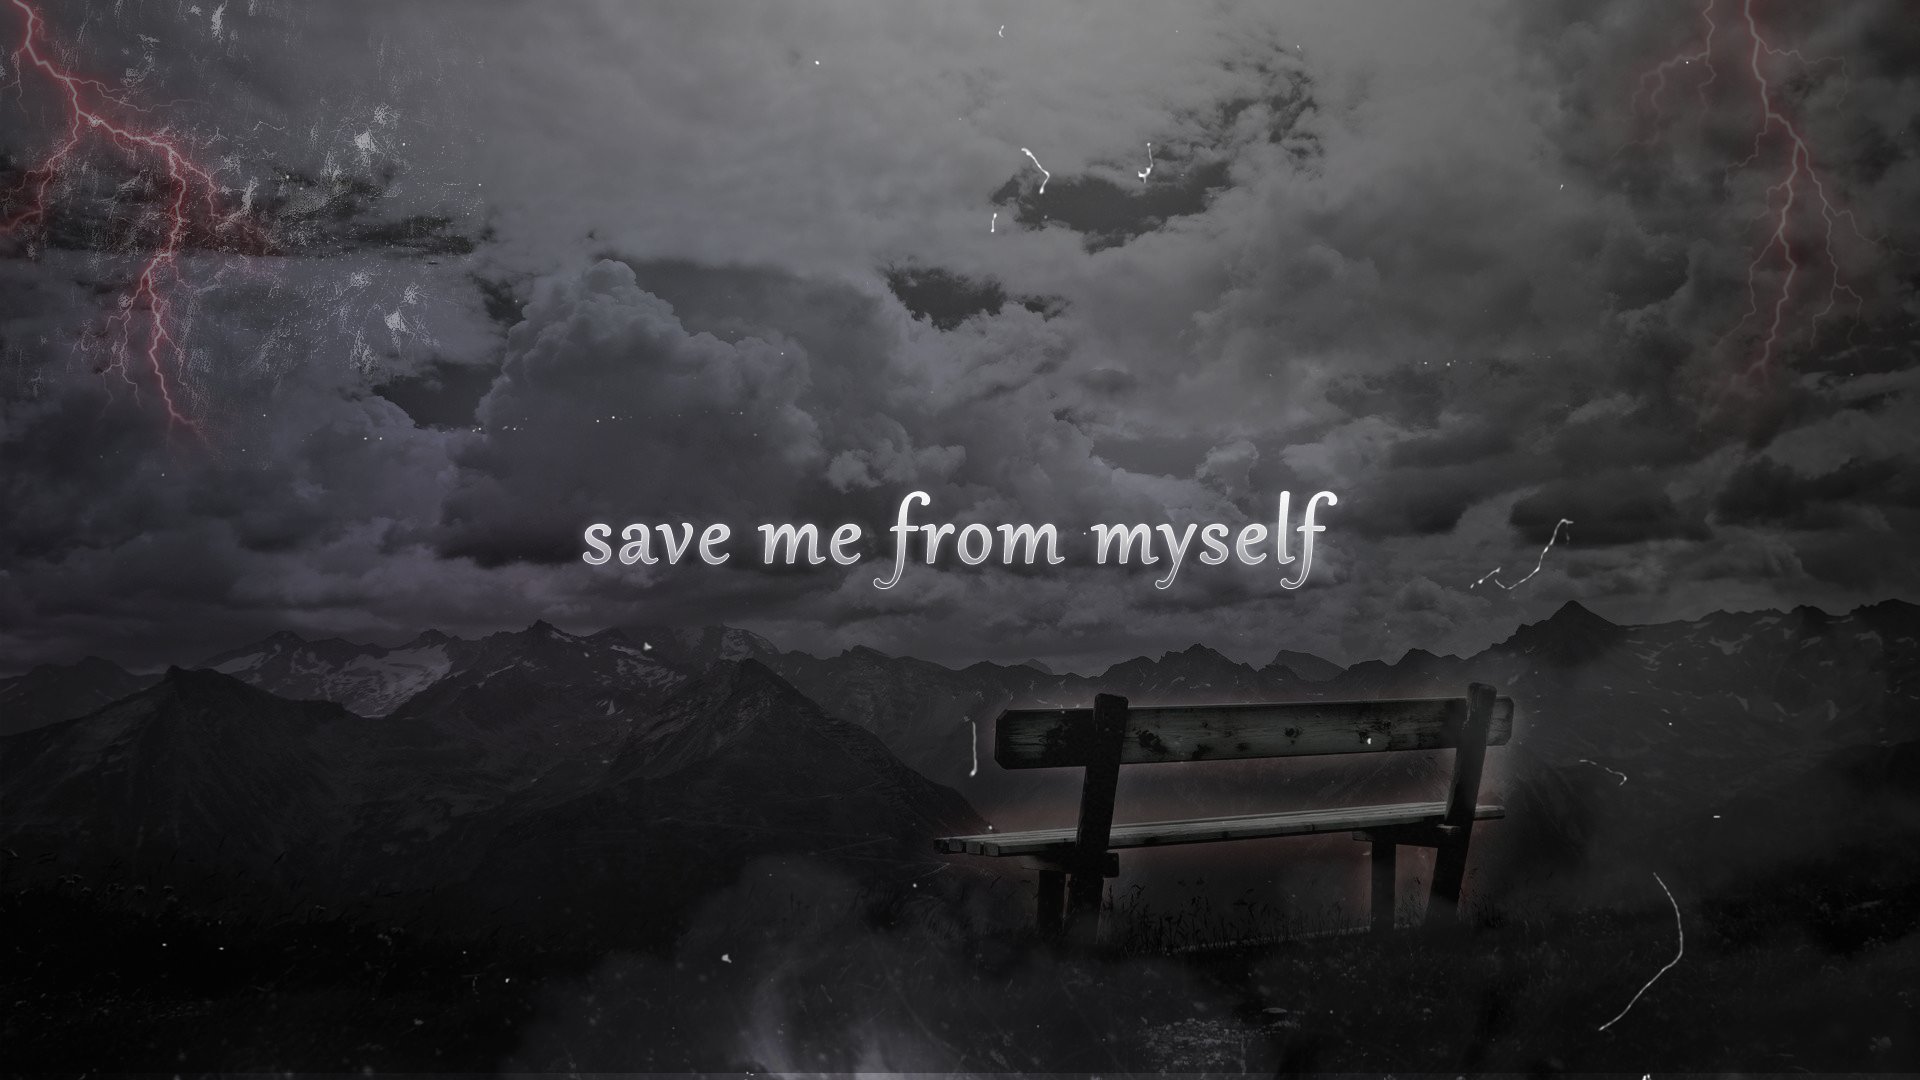 Depressing Art on Twitter: "Save Me From Myself. #Depressing #